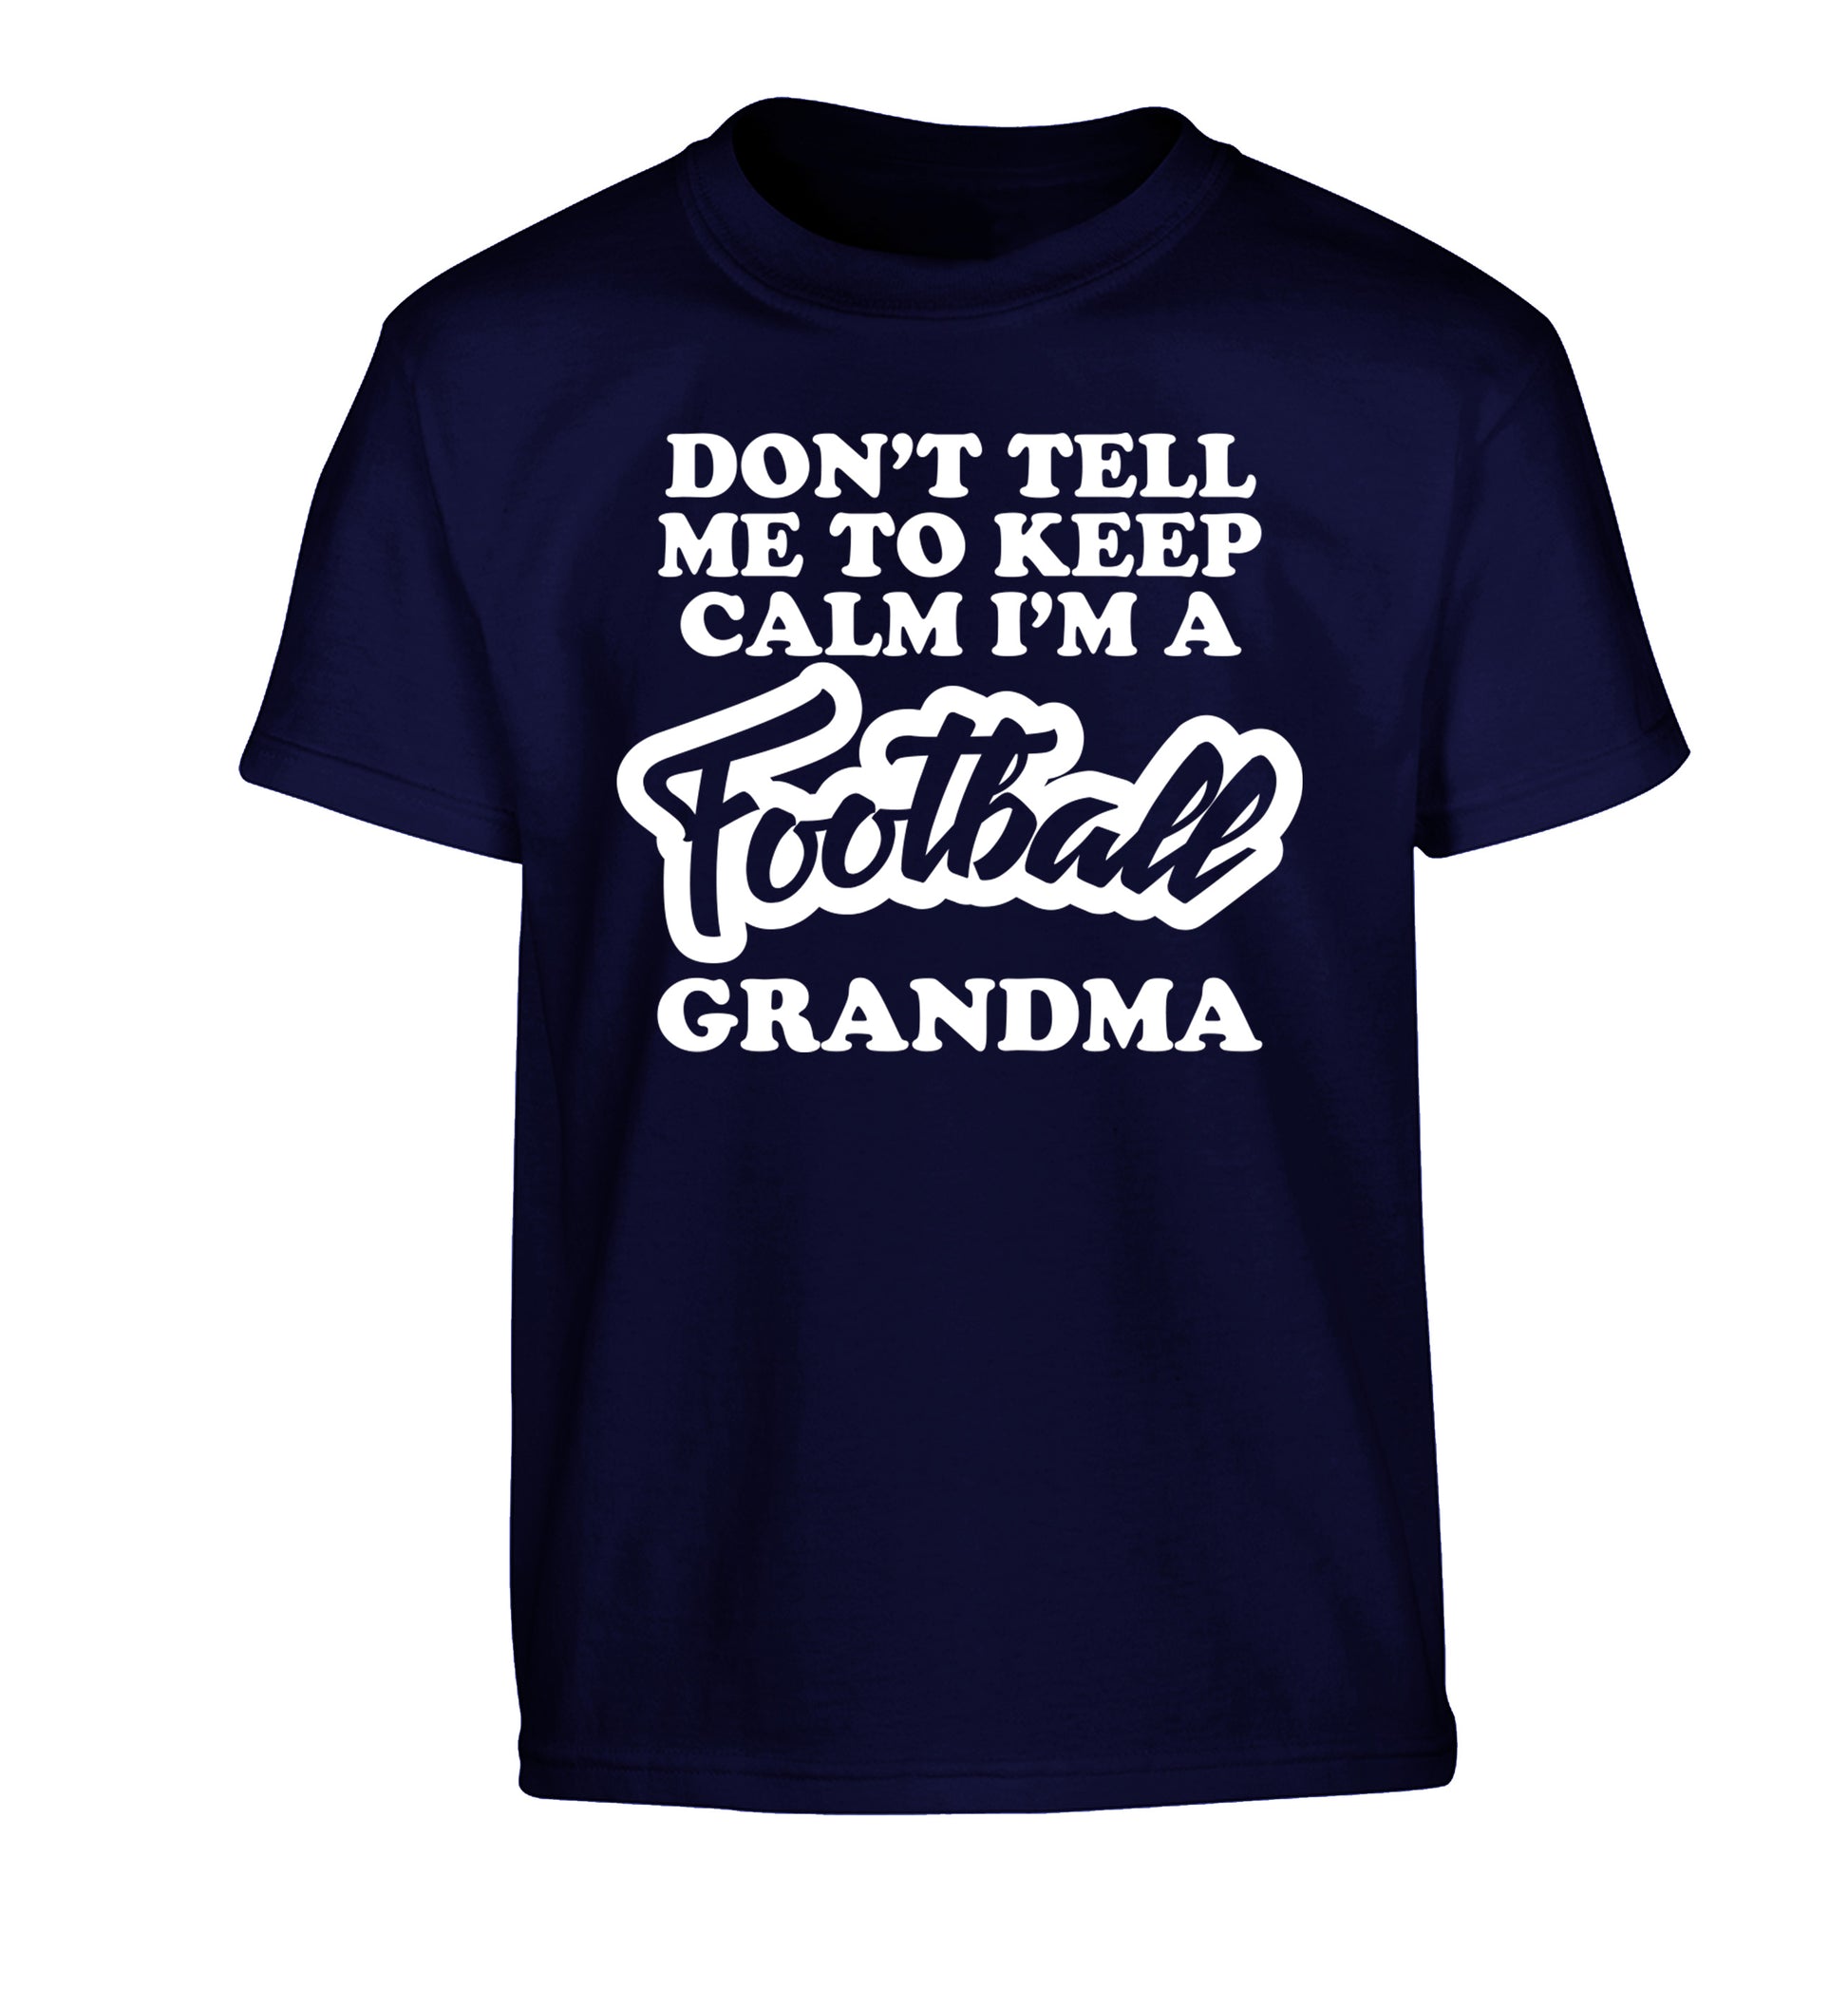 Don't tell me to keep calm I'm a football grandma Children's navy Tshirt 12-14 Years